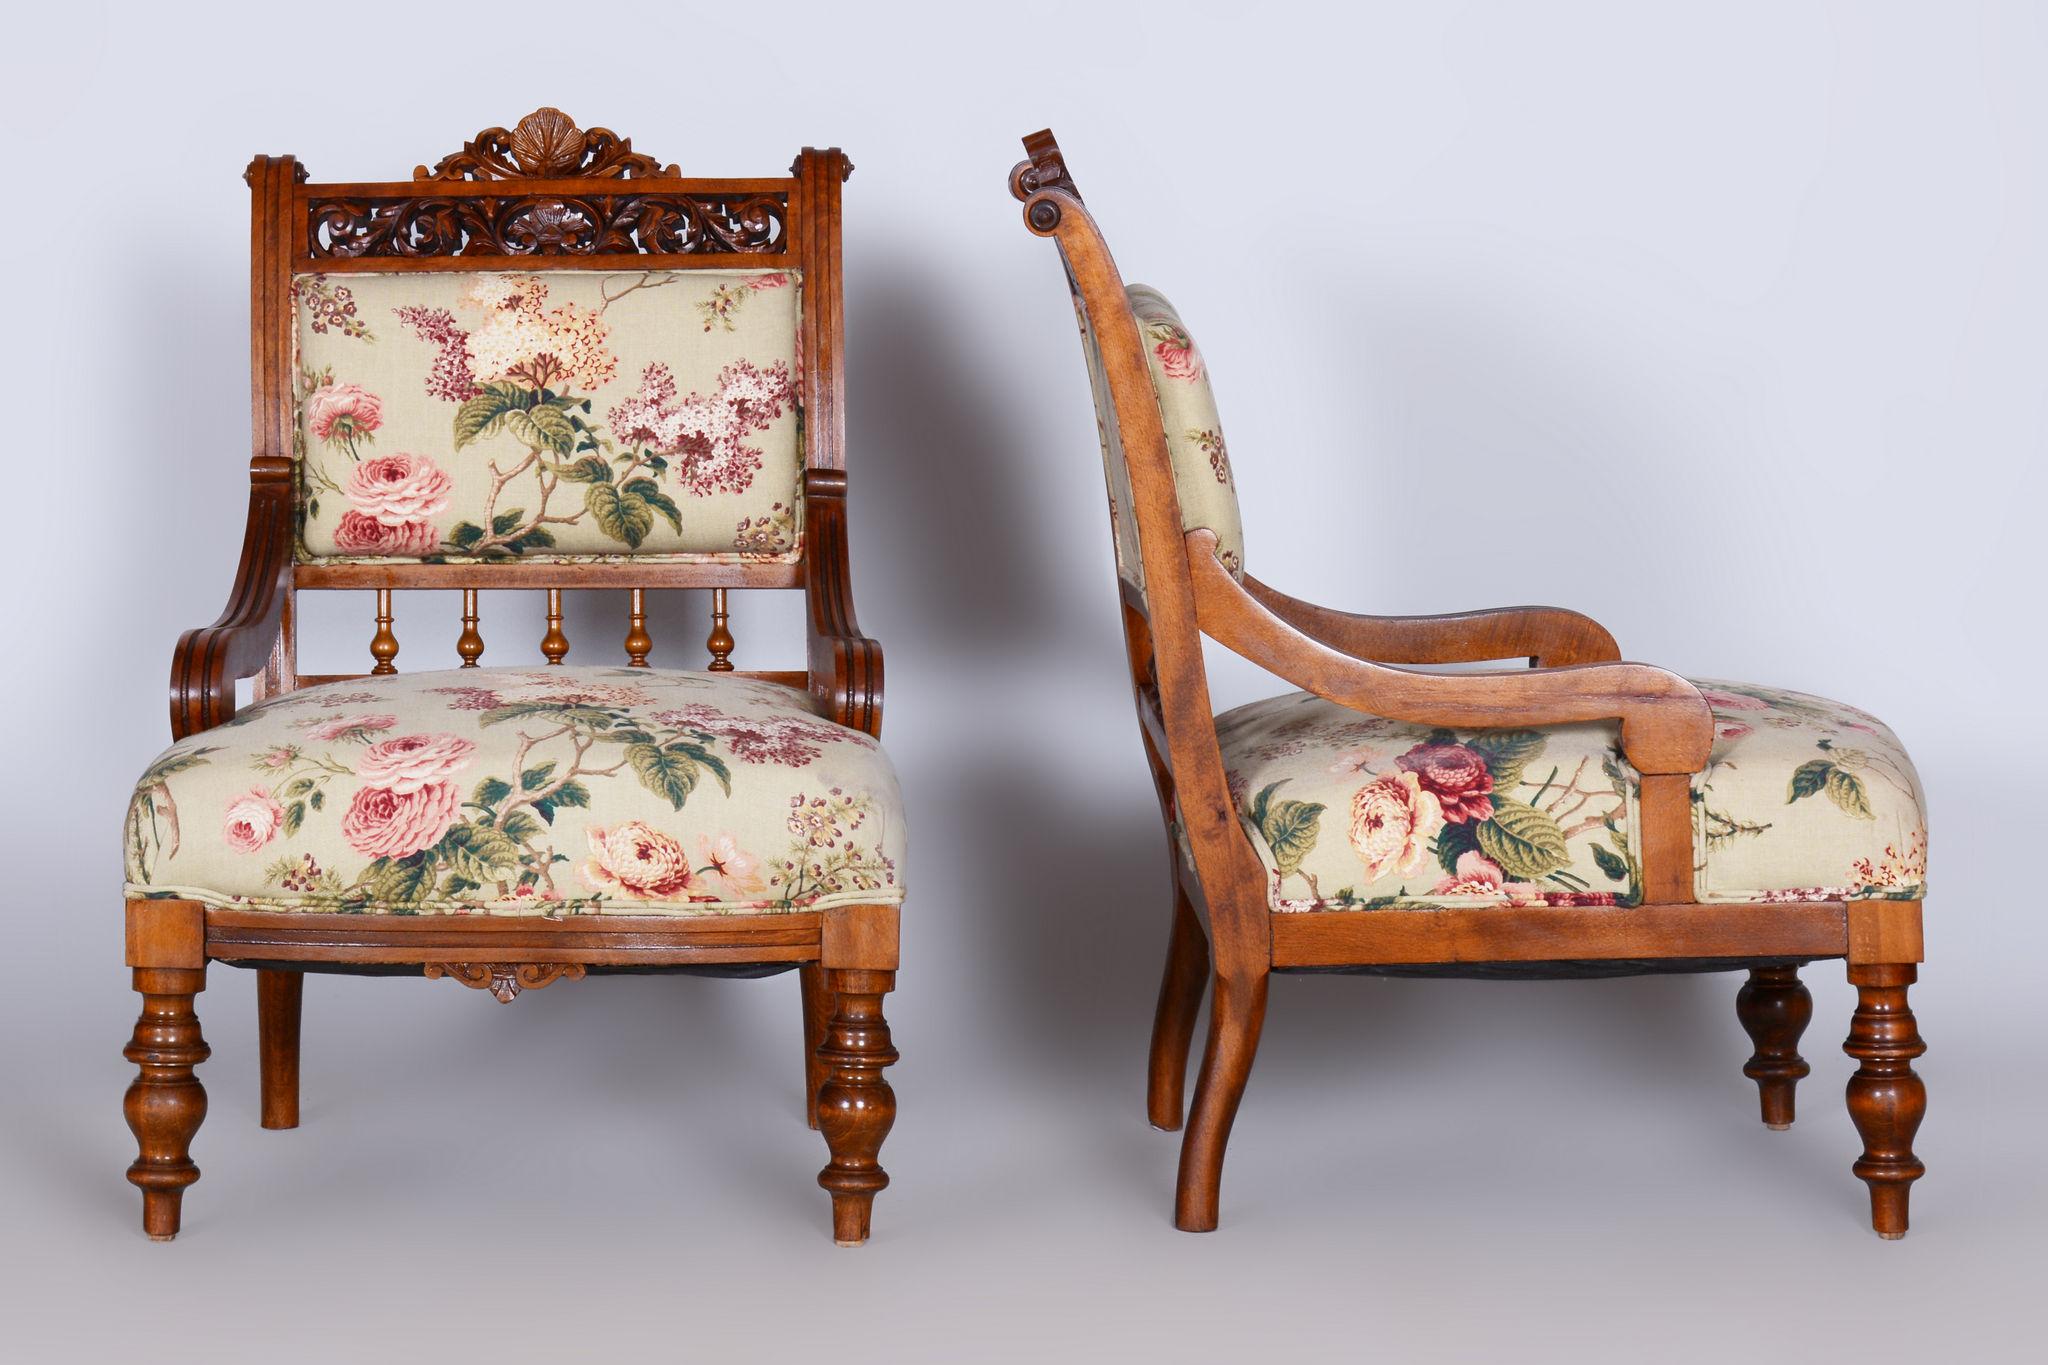 Biedermeier Restored Seating Set, Historicism, Beech, Walnut, Czechia, 1890s For Sale